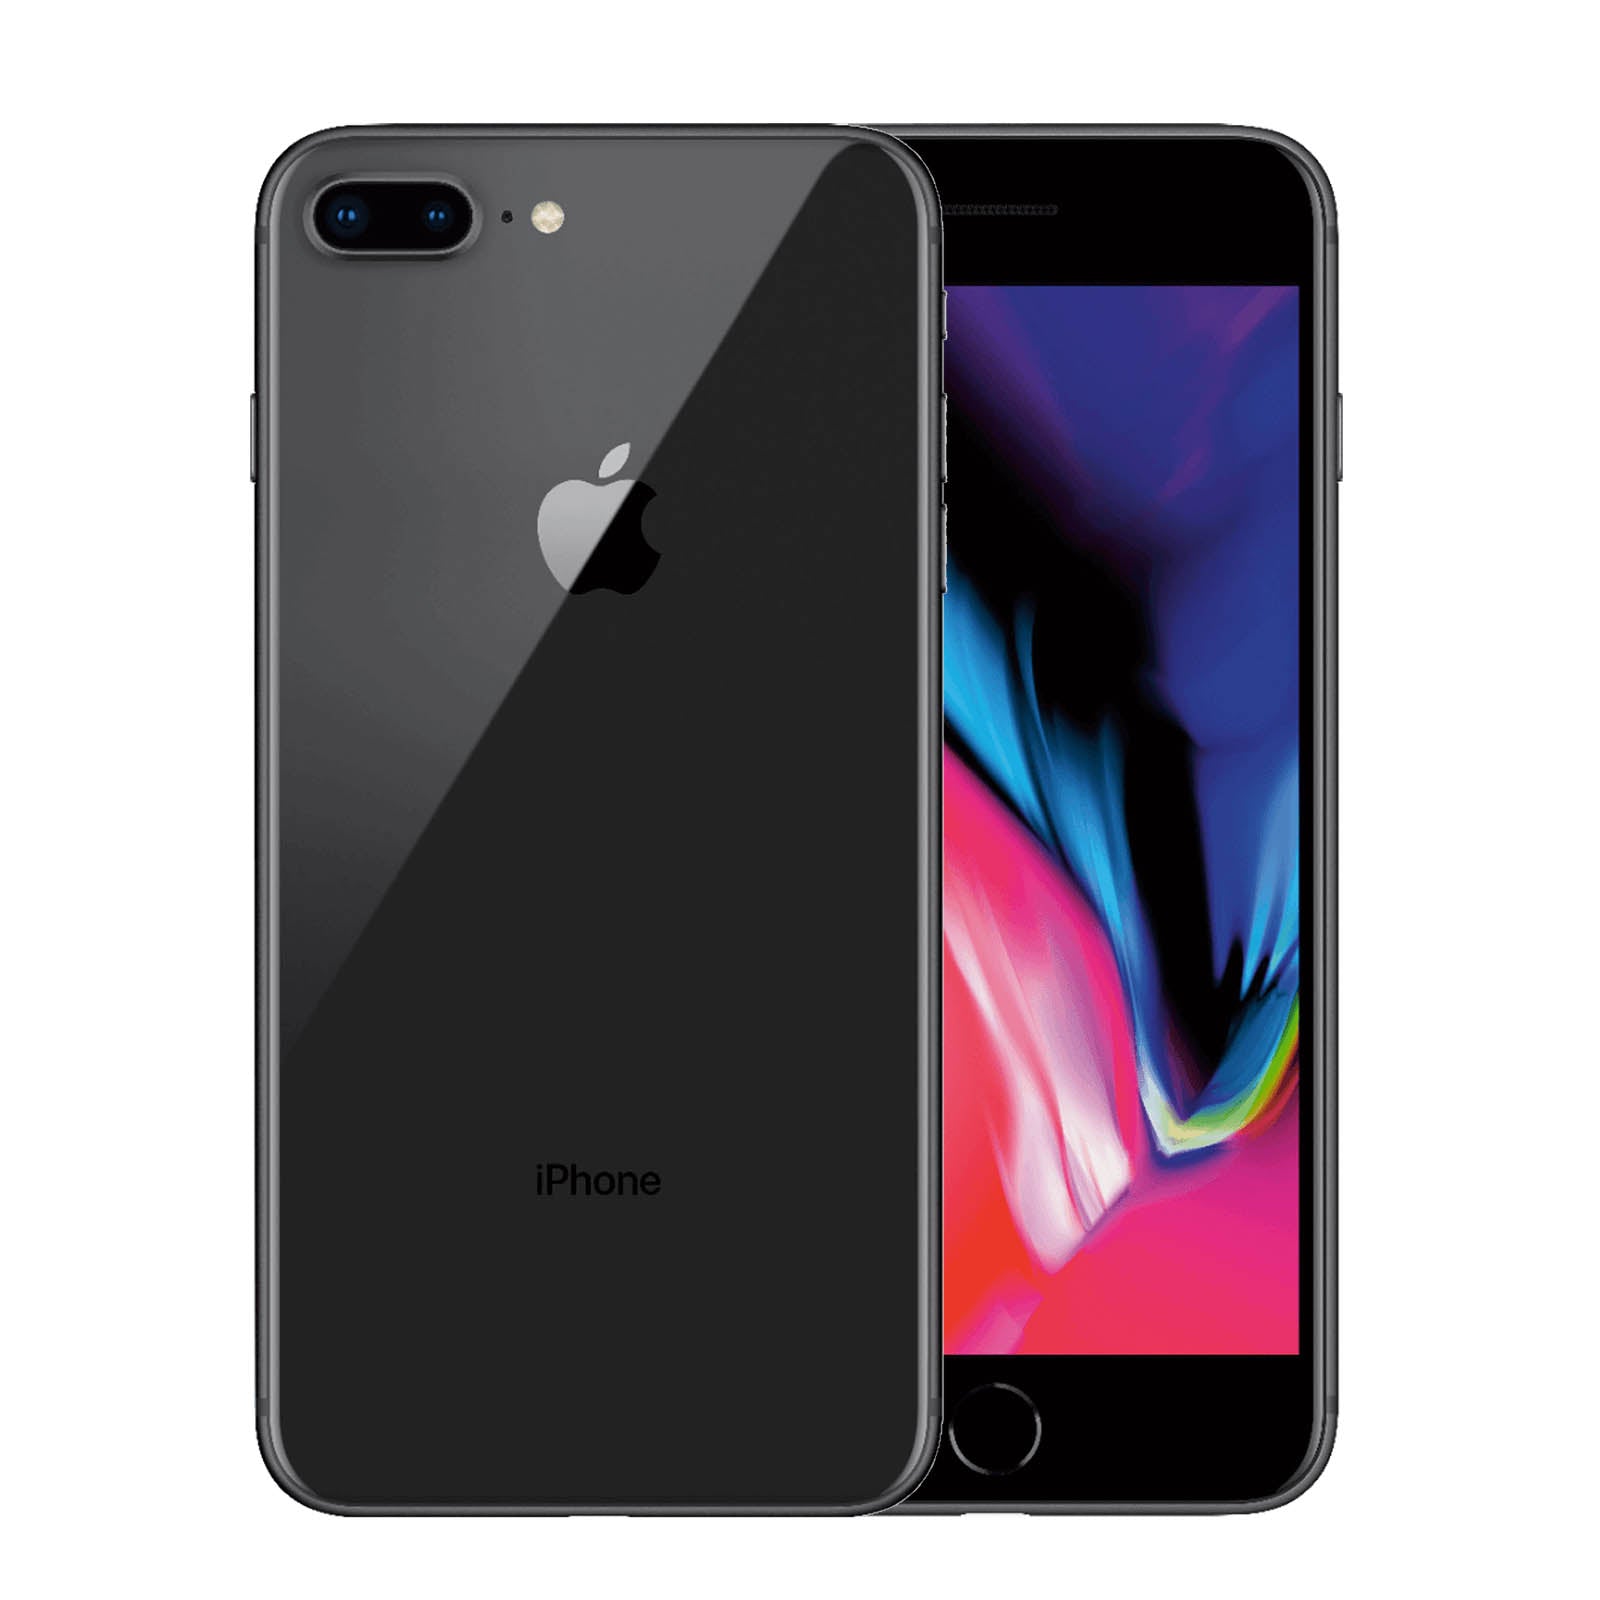 Apple iPhone 8 Plus 256GB Space Grey Good - Unlocked